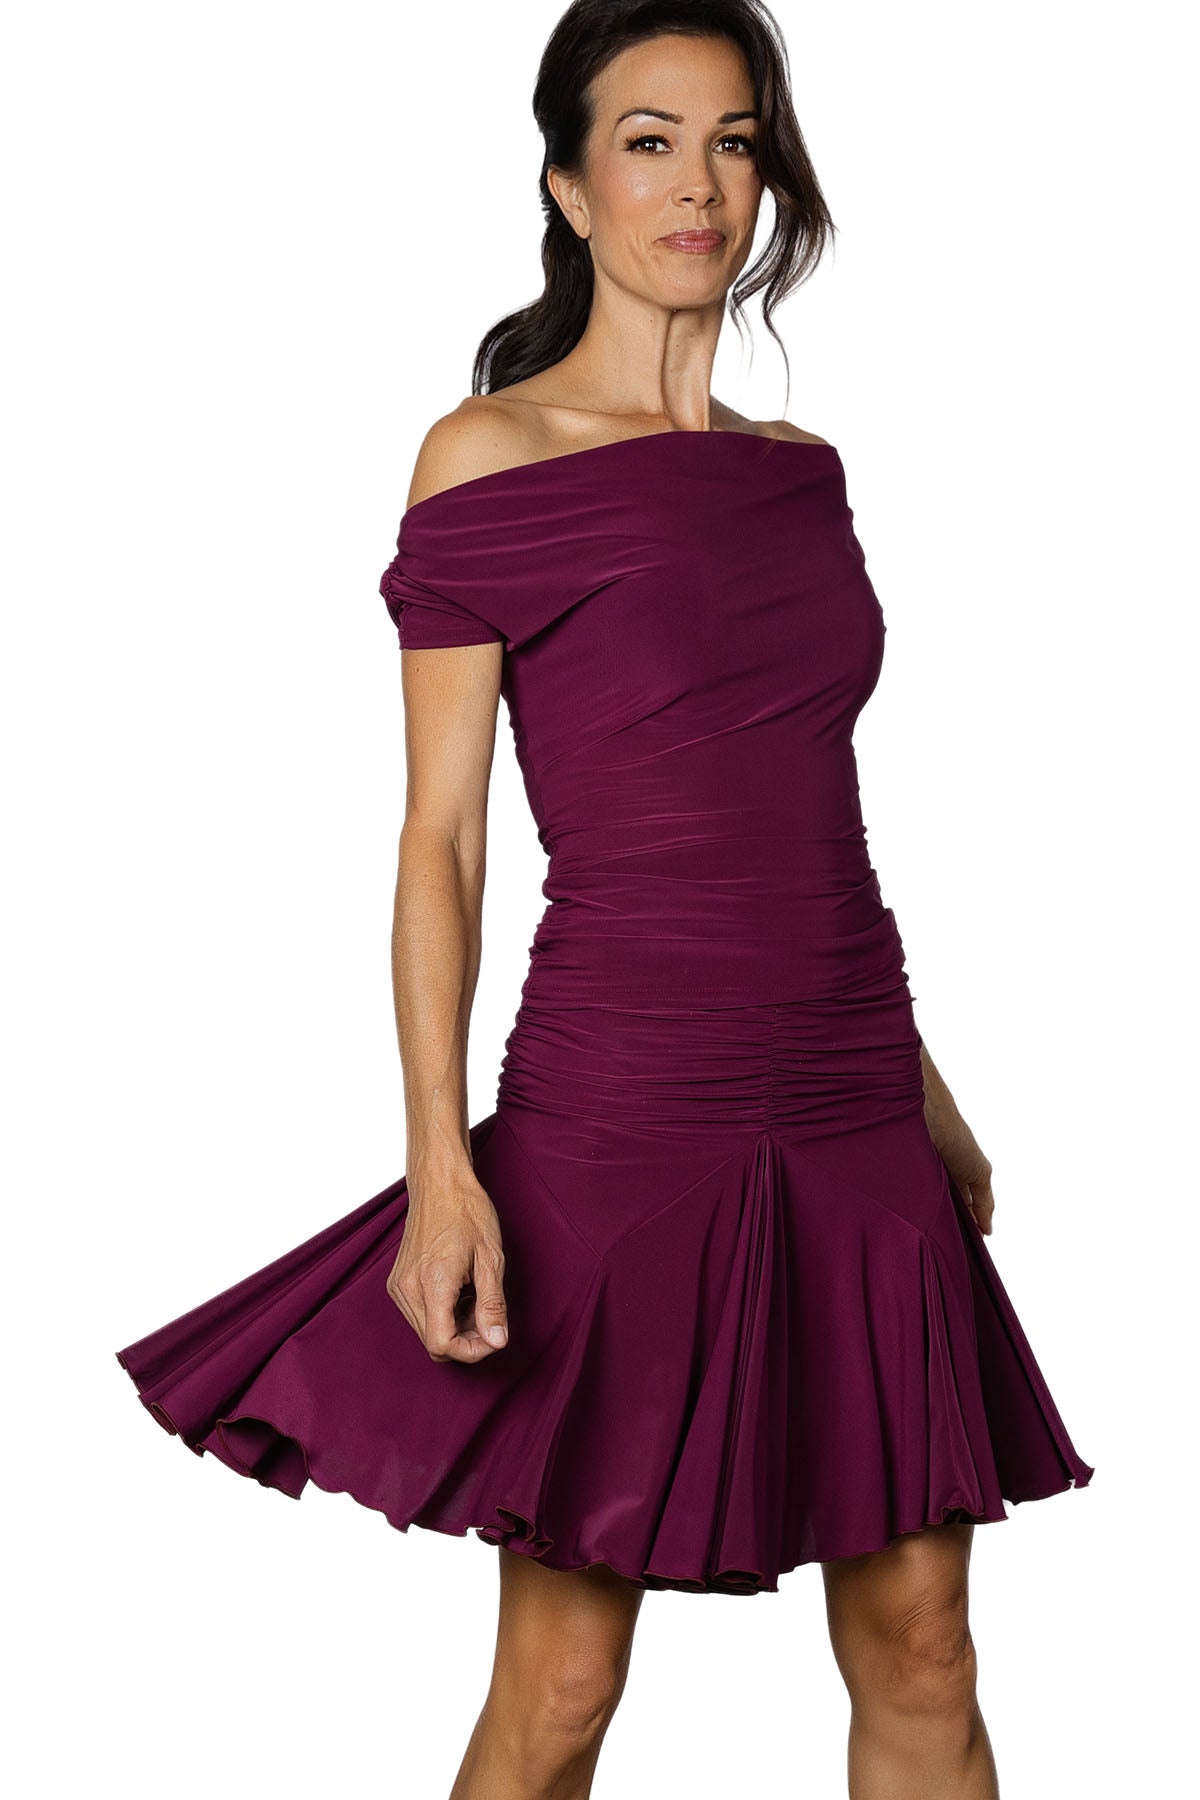 Ladies' wine colored Latin dance skirt